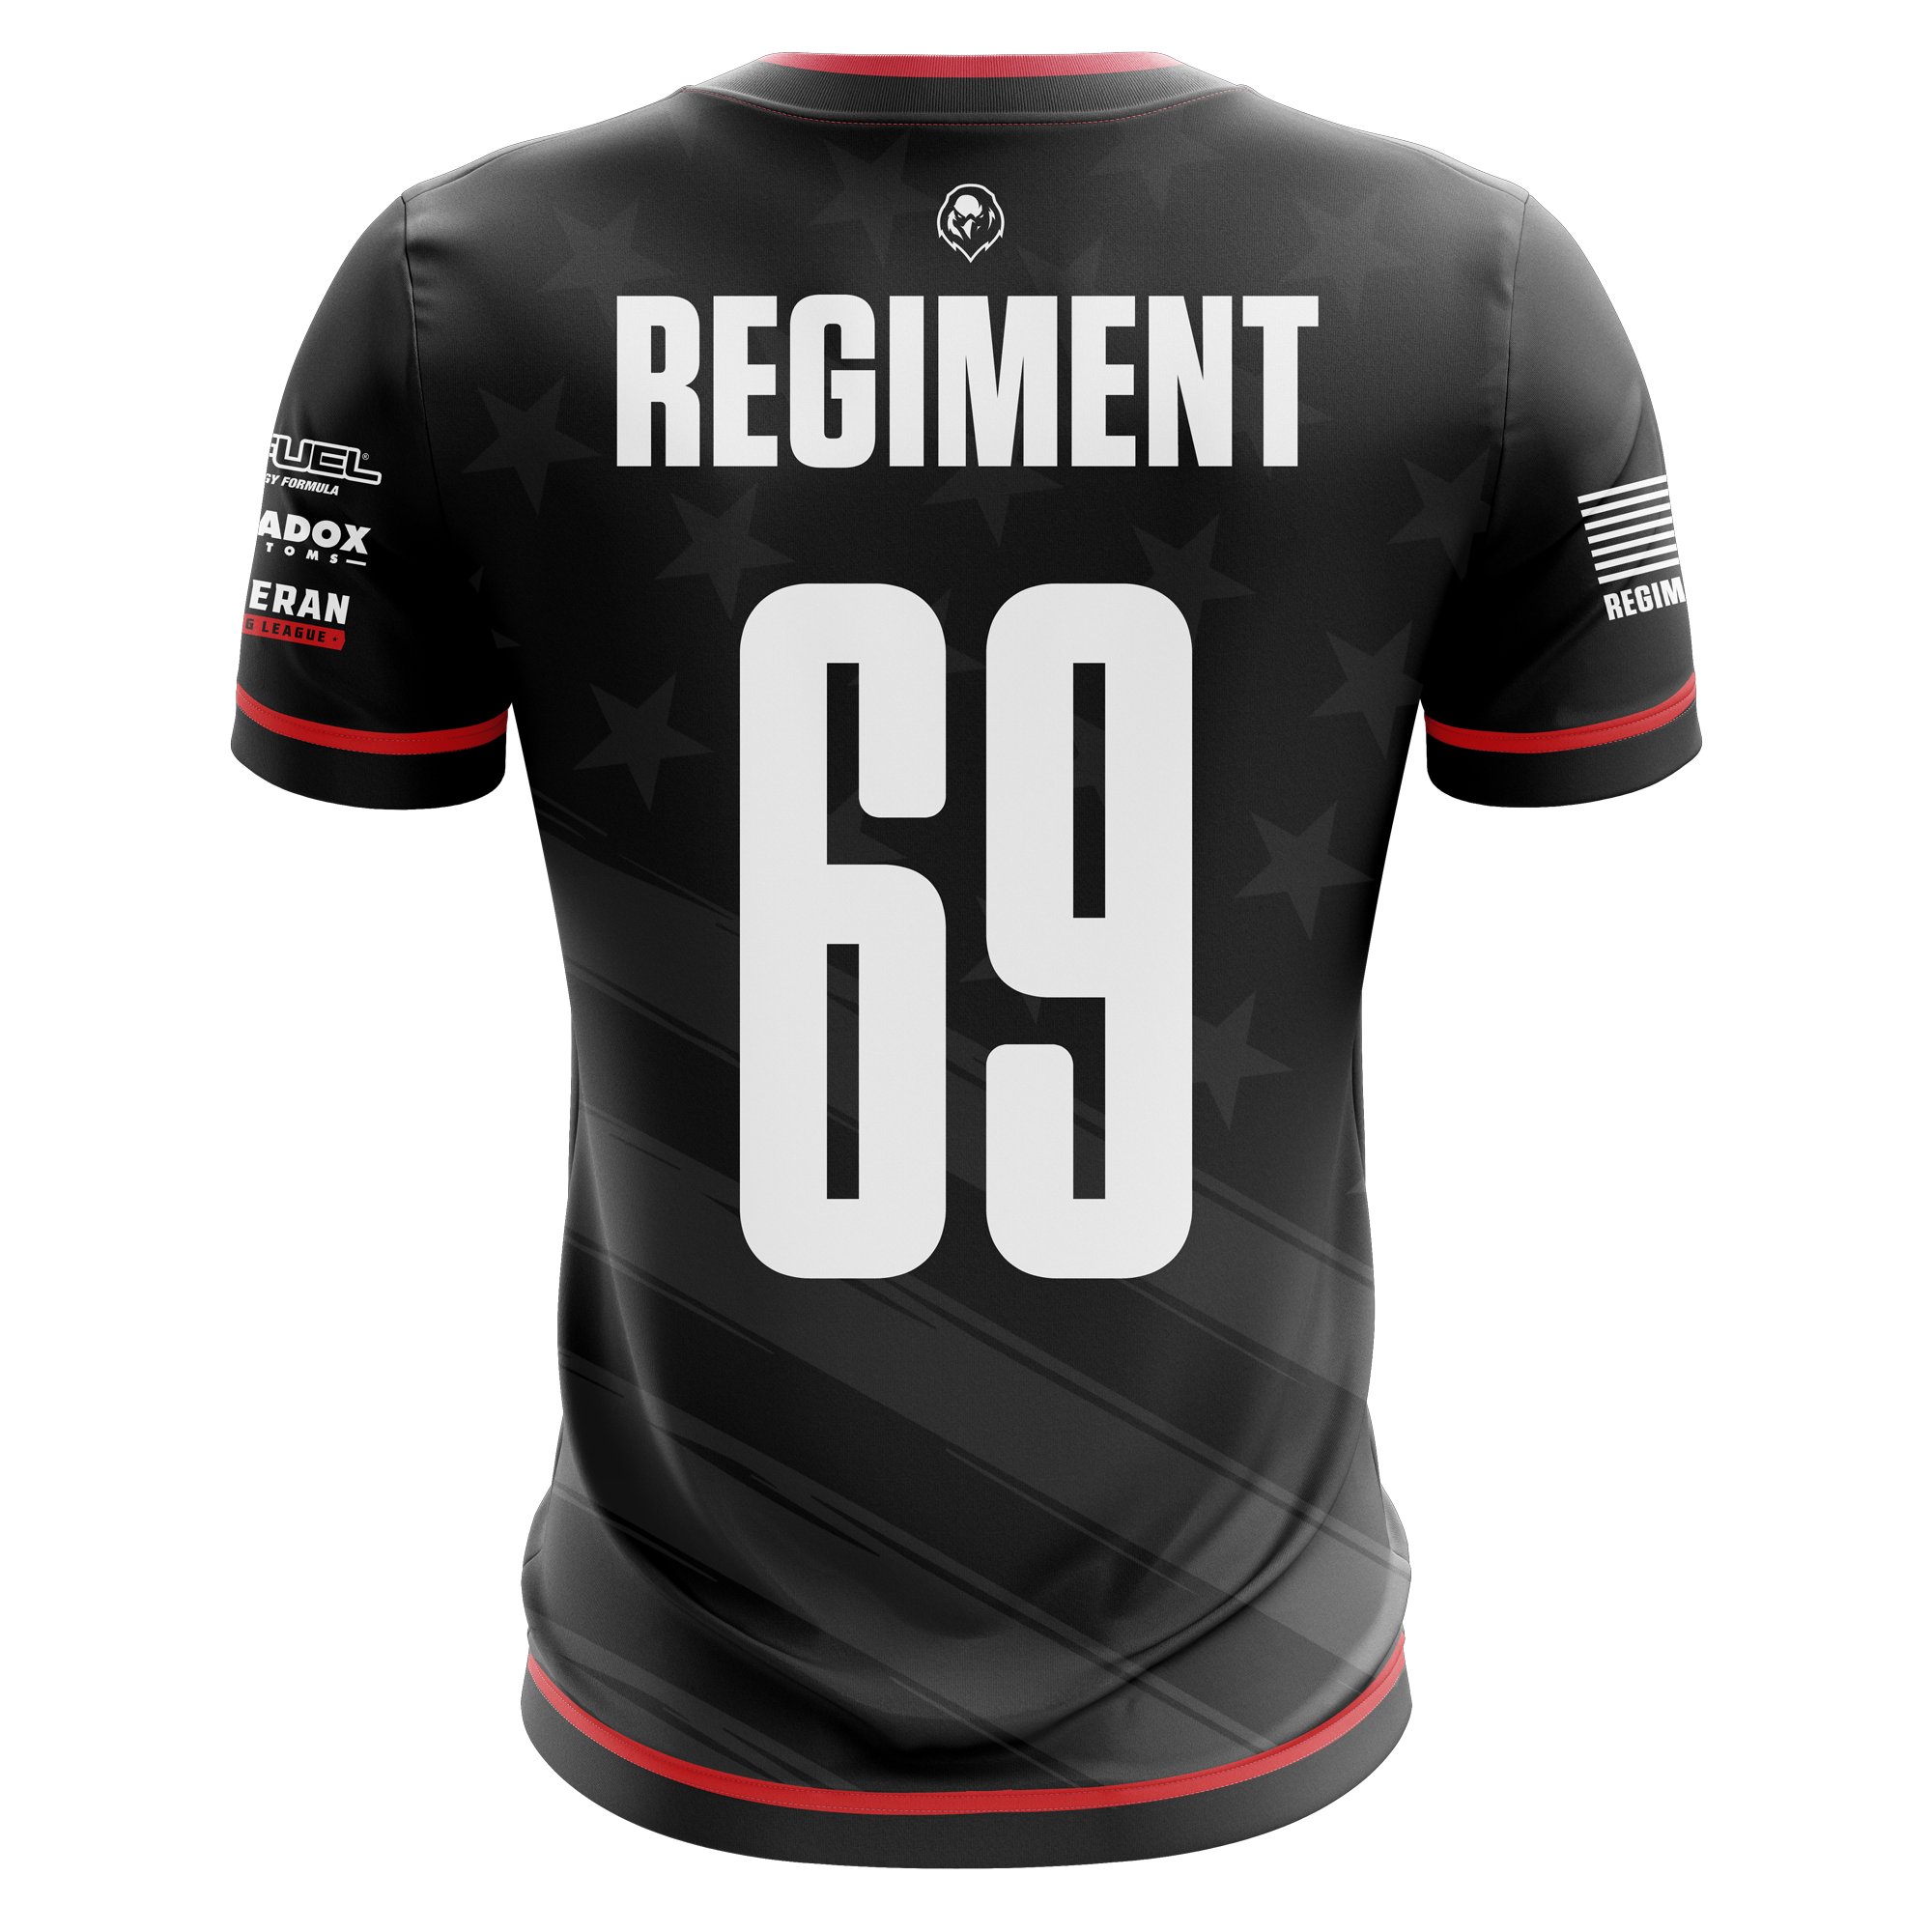 REGIMENT Jersey - Black